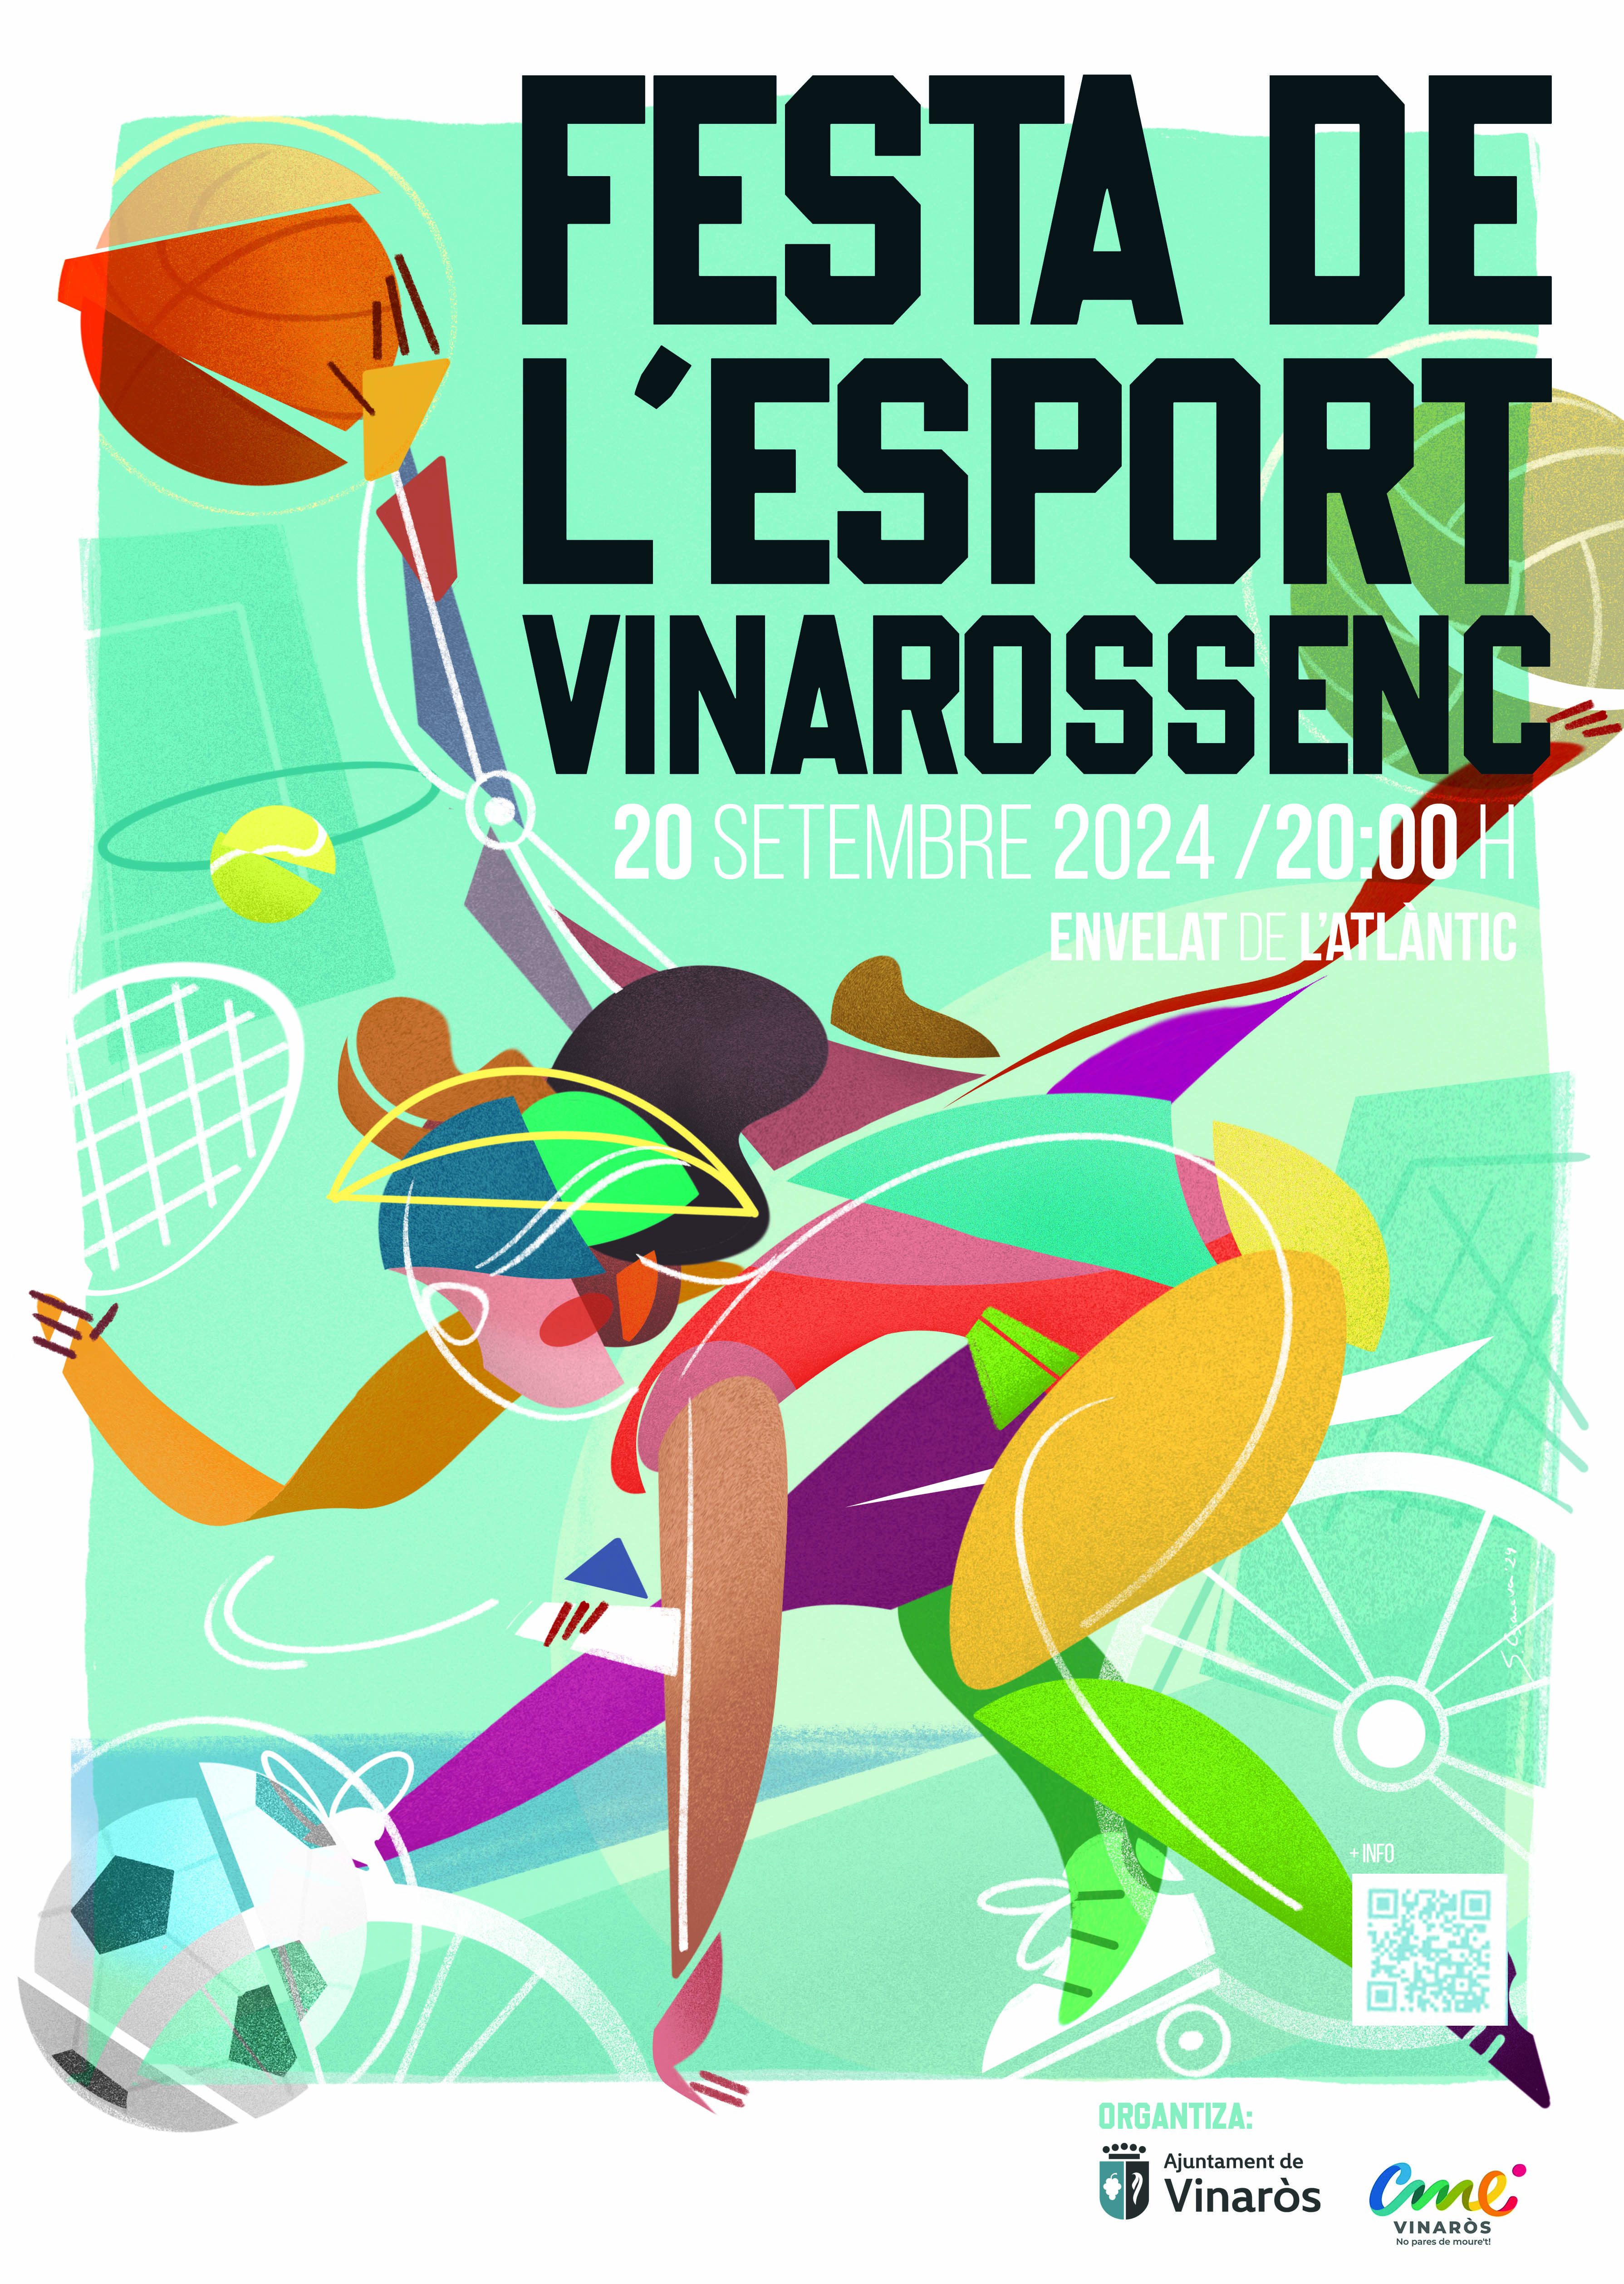 Festa Esport Vinarossenc 2024